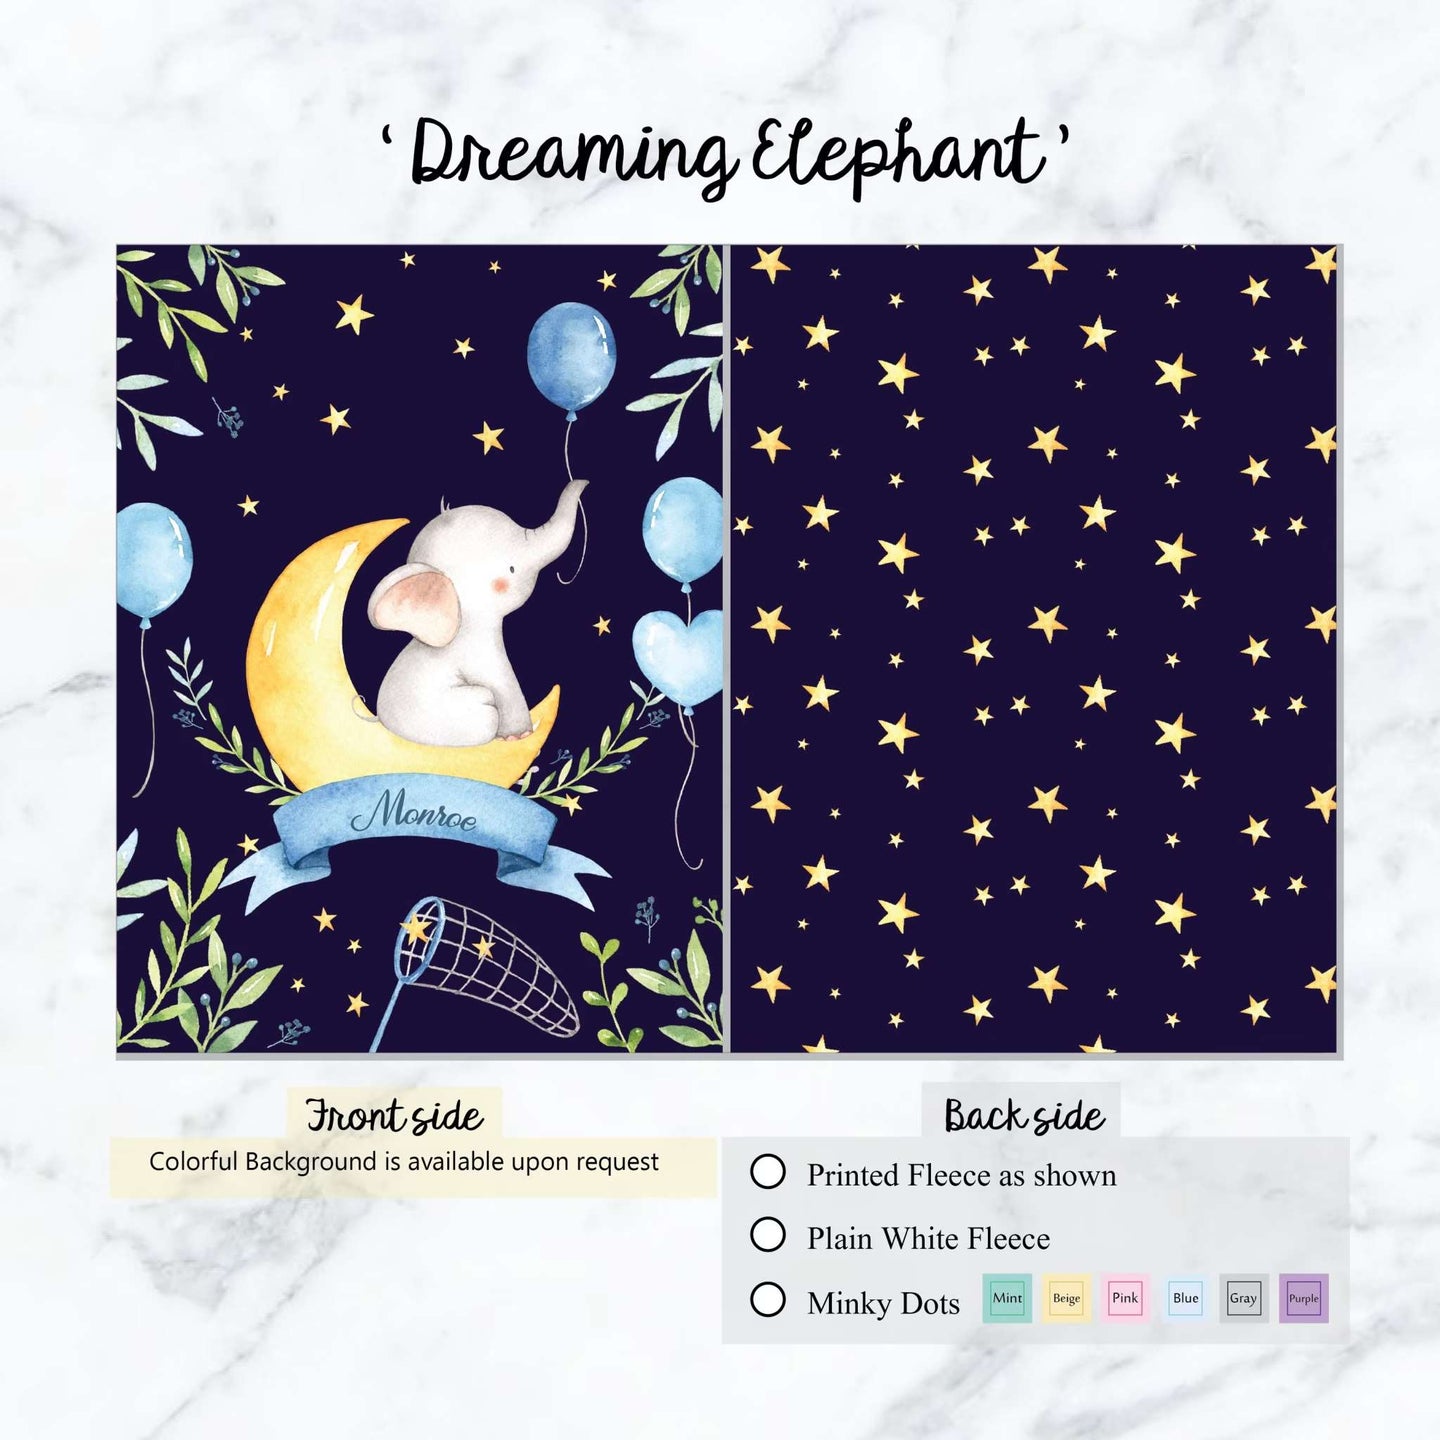 Dreaming Elephant